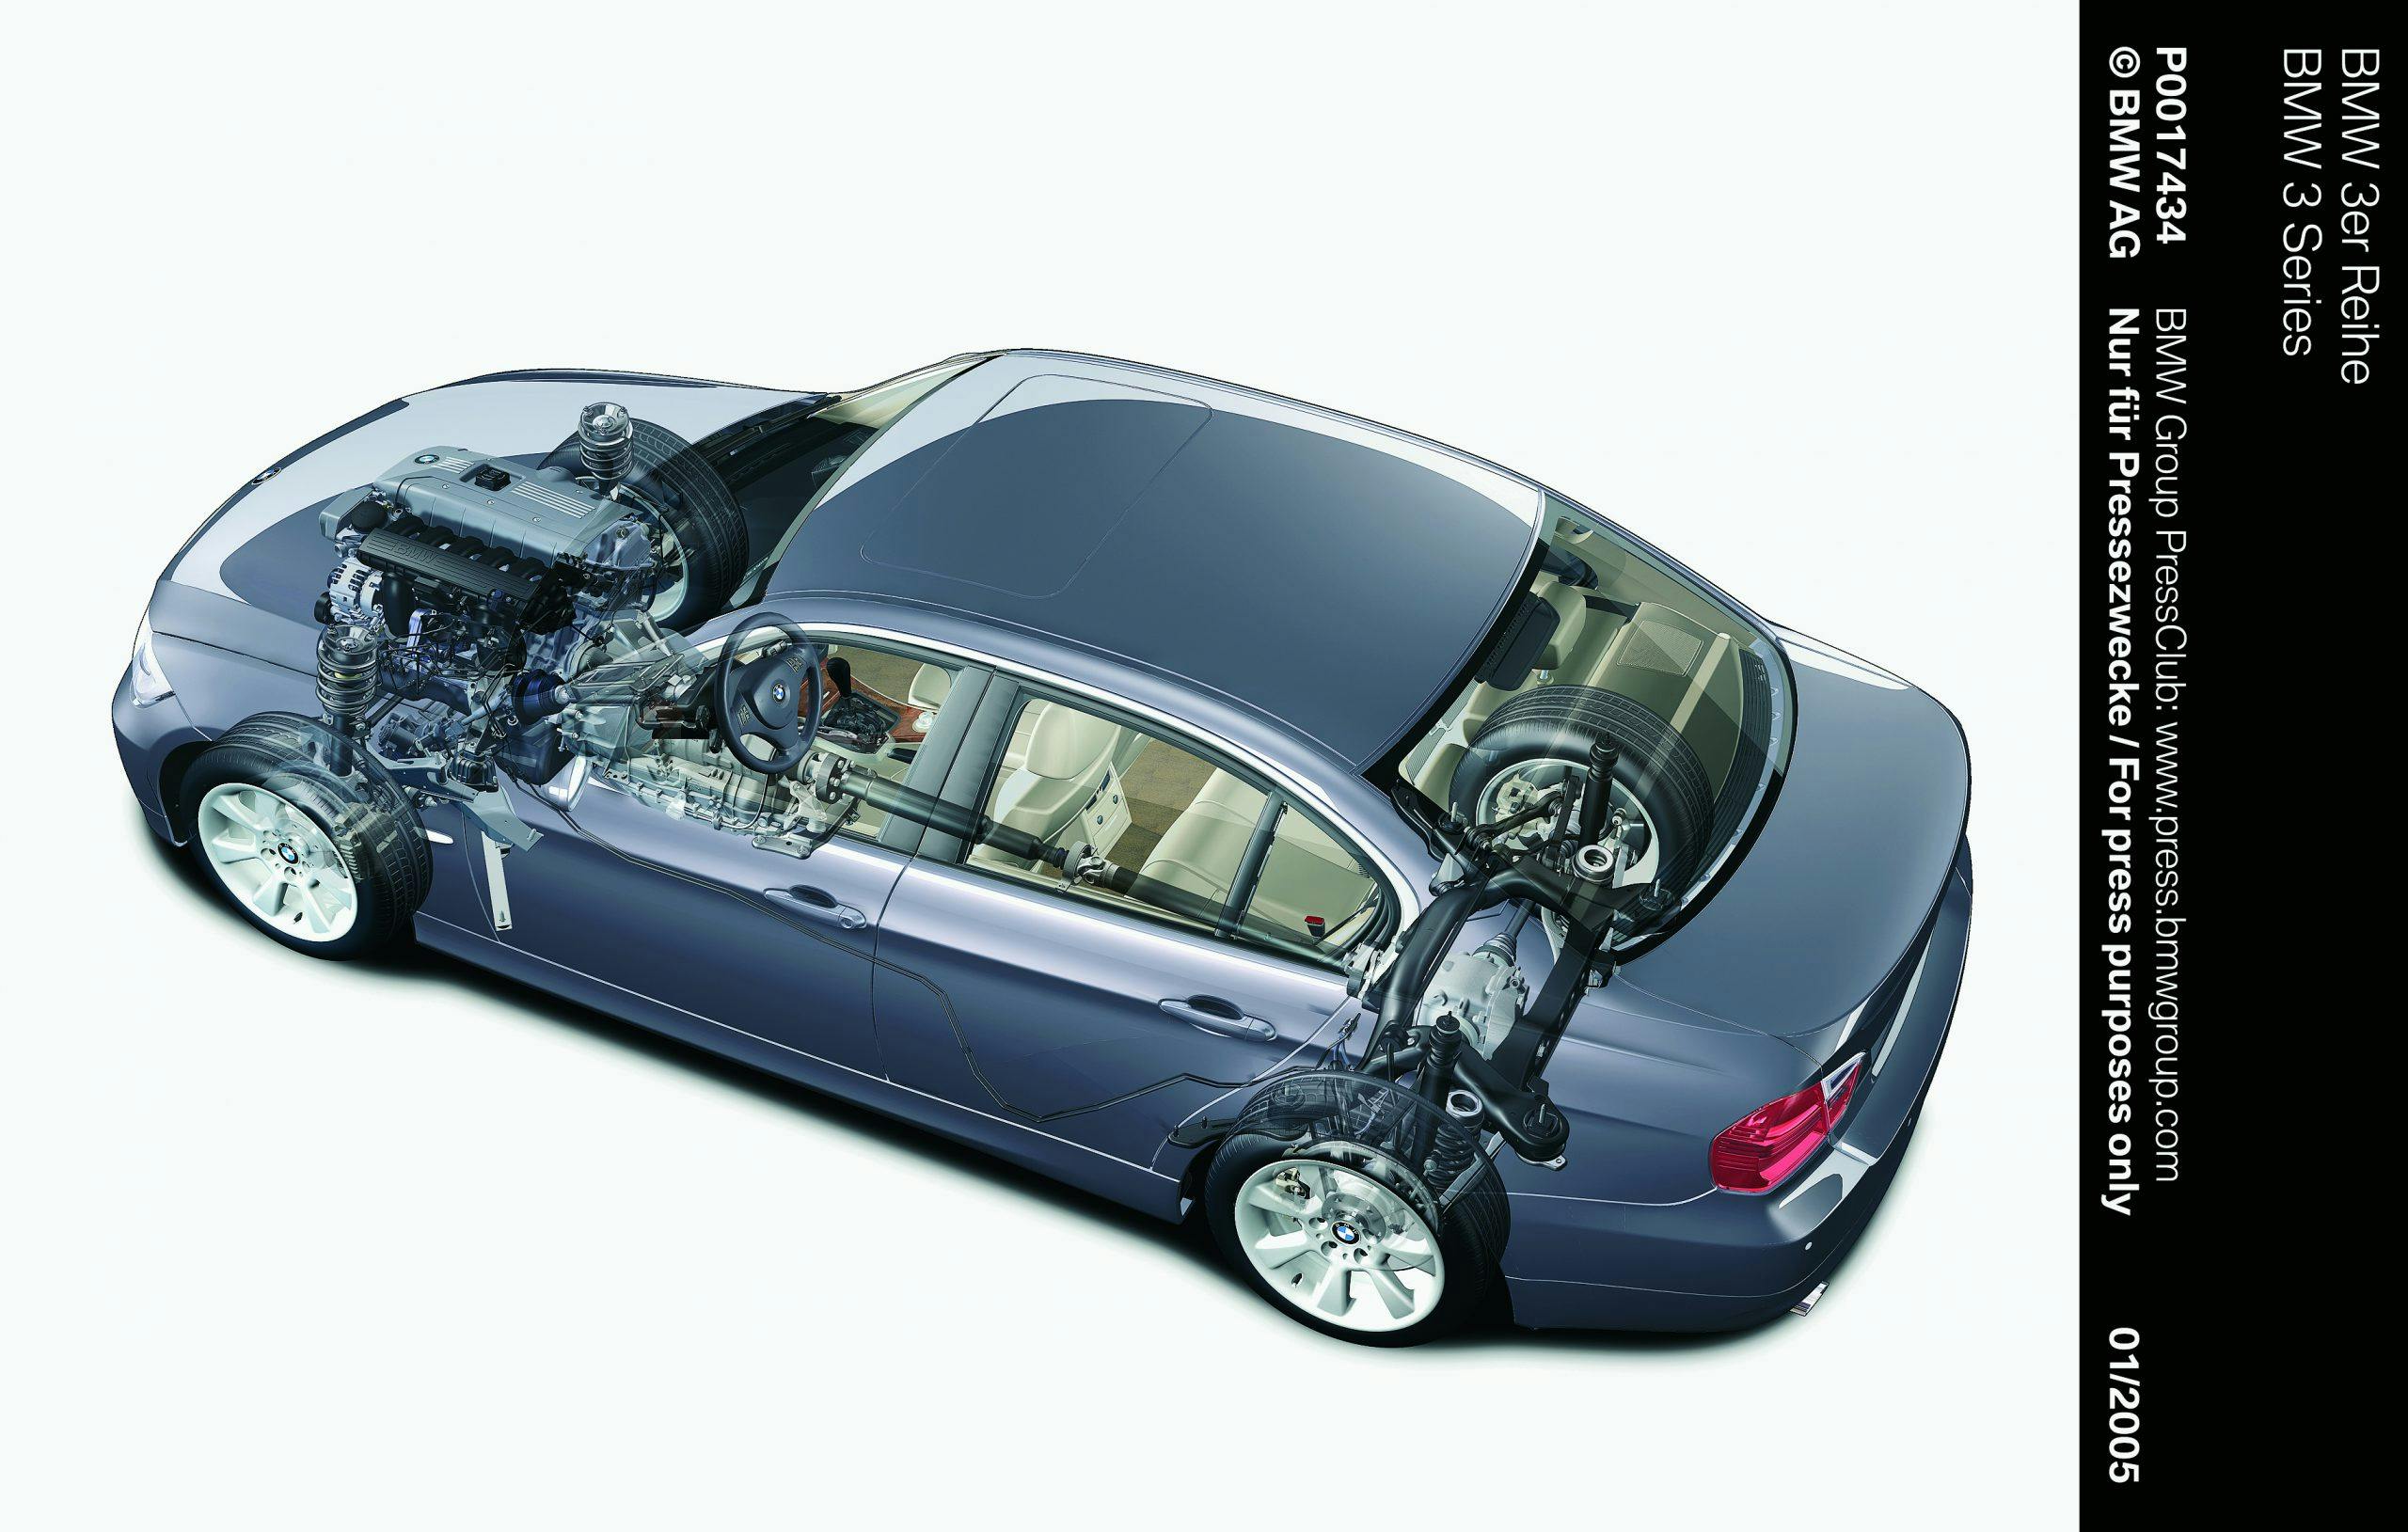 BMW e90 3 series cutaway engine